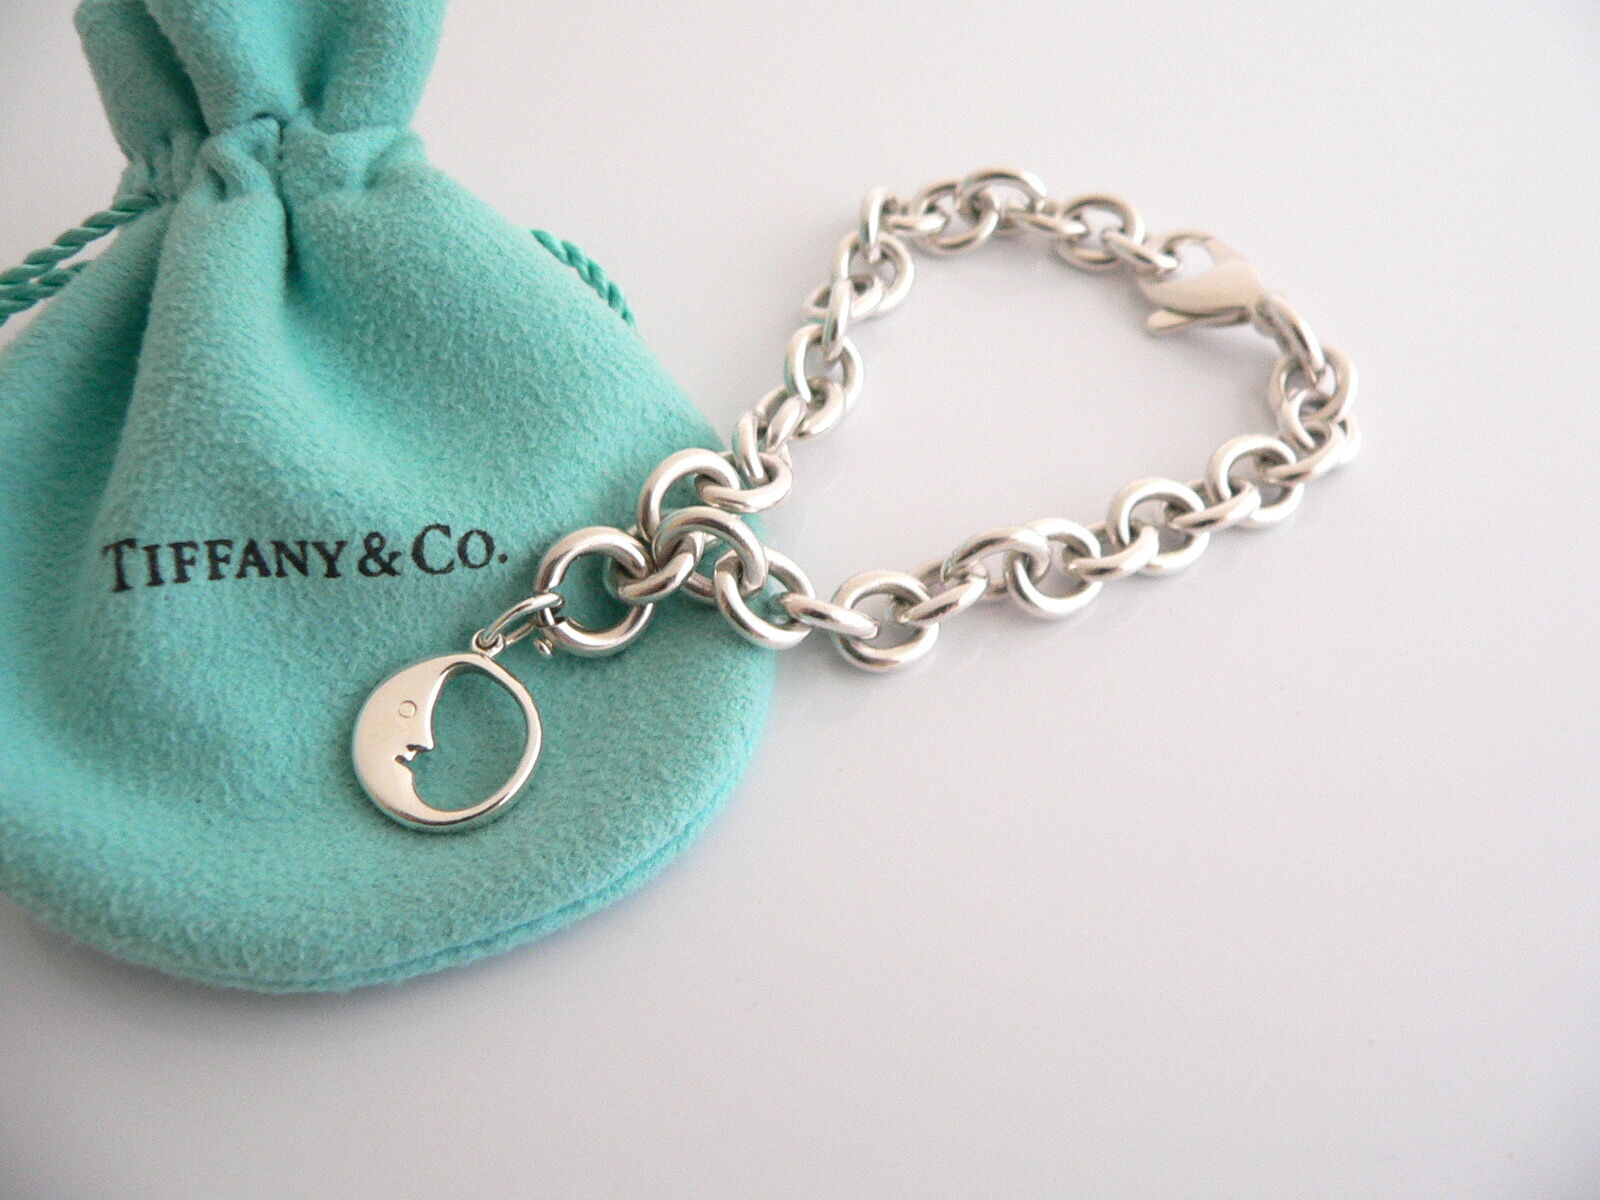 Tiffany & Co Silver Moon Bracelet Bangle Charm Pendant Chain Gift Pouch Love